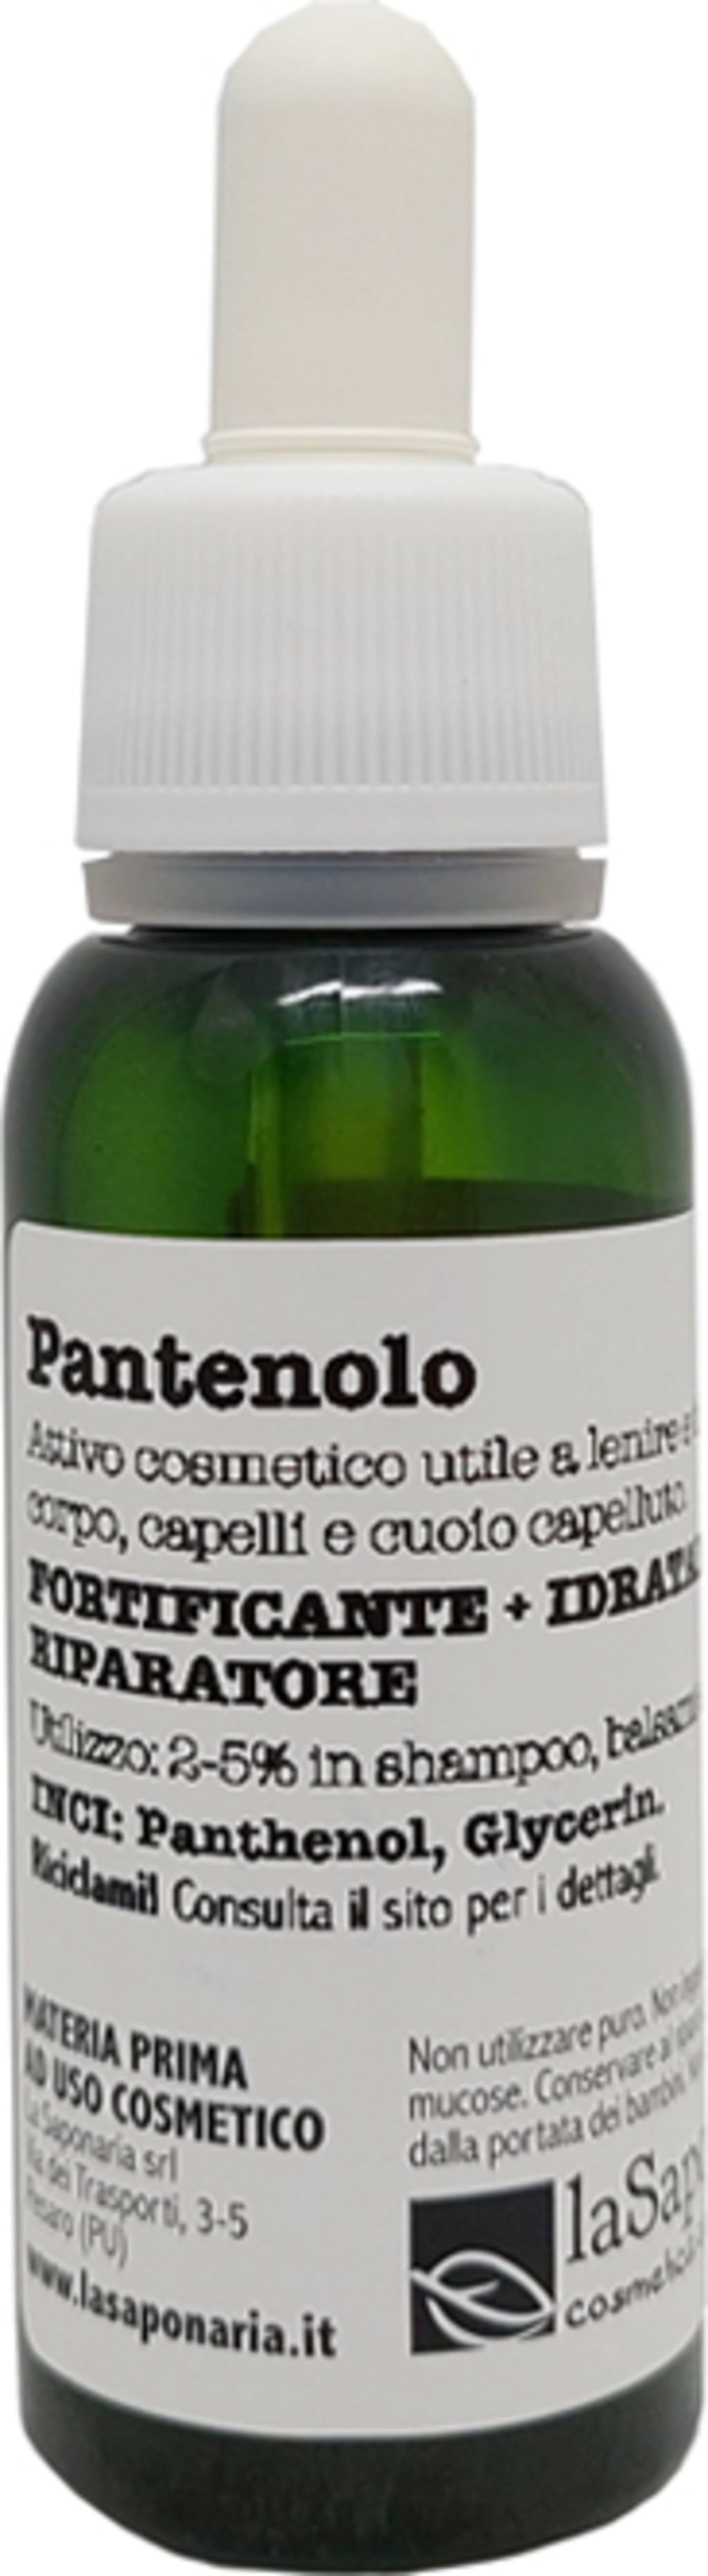 La Saponaria Pantenolo - 25 ml